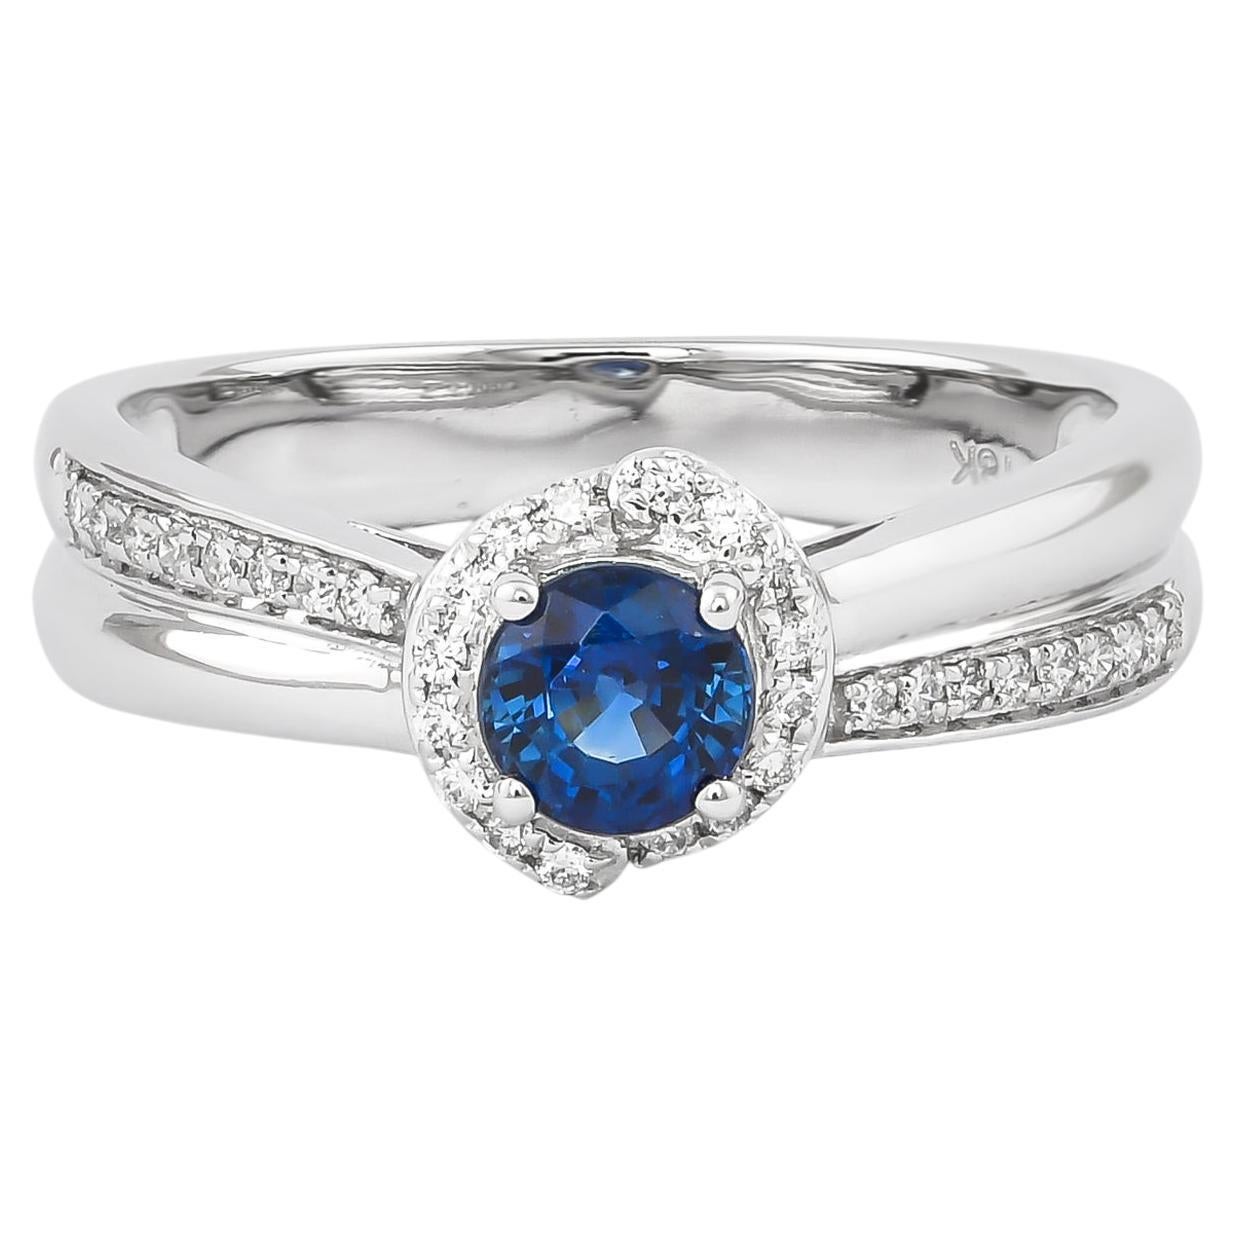 0.5 Carat Blue Sapphire and Diamond Ring in 18 Karat White Gold